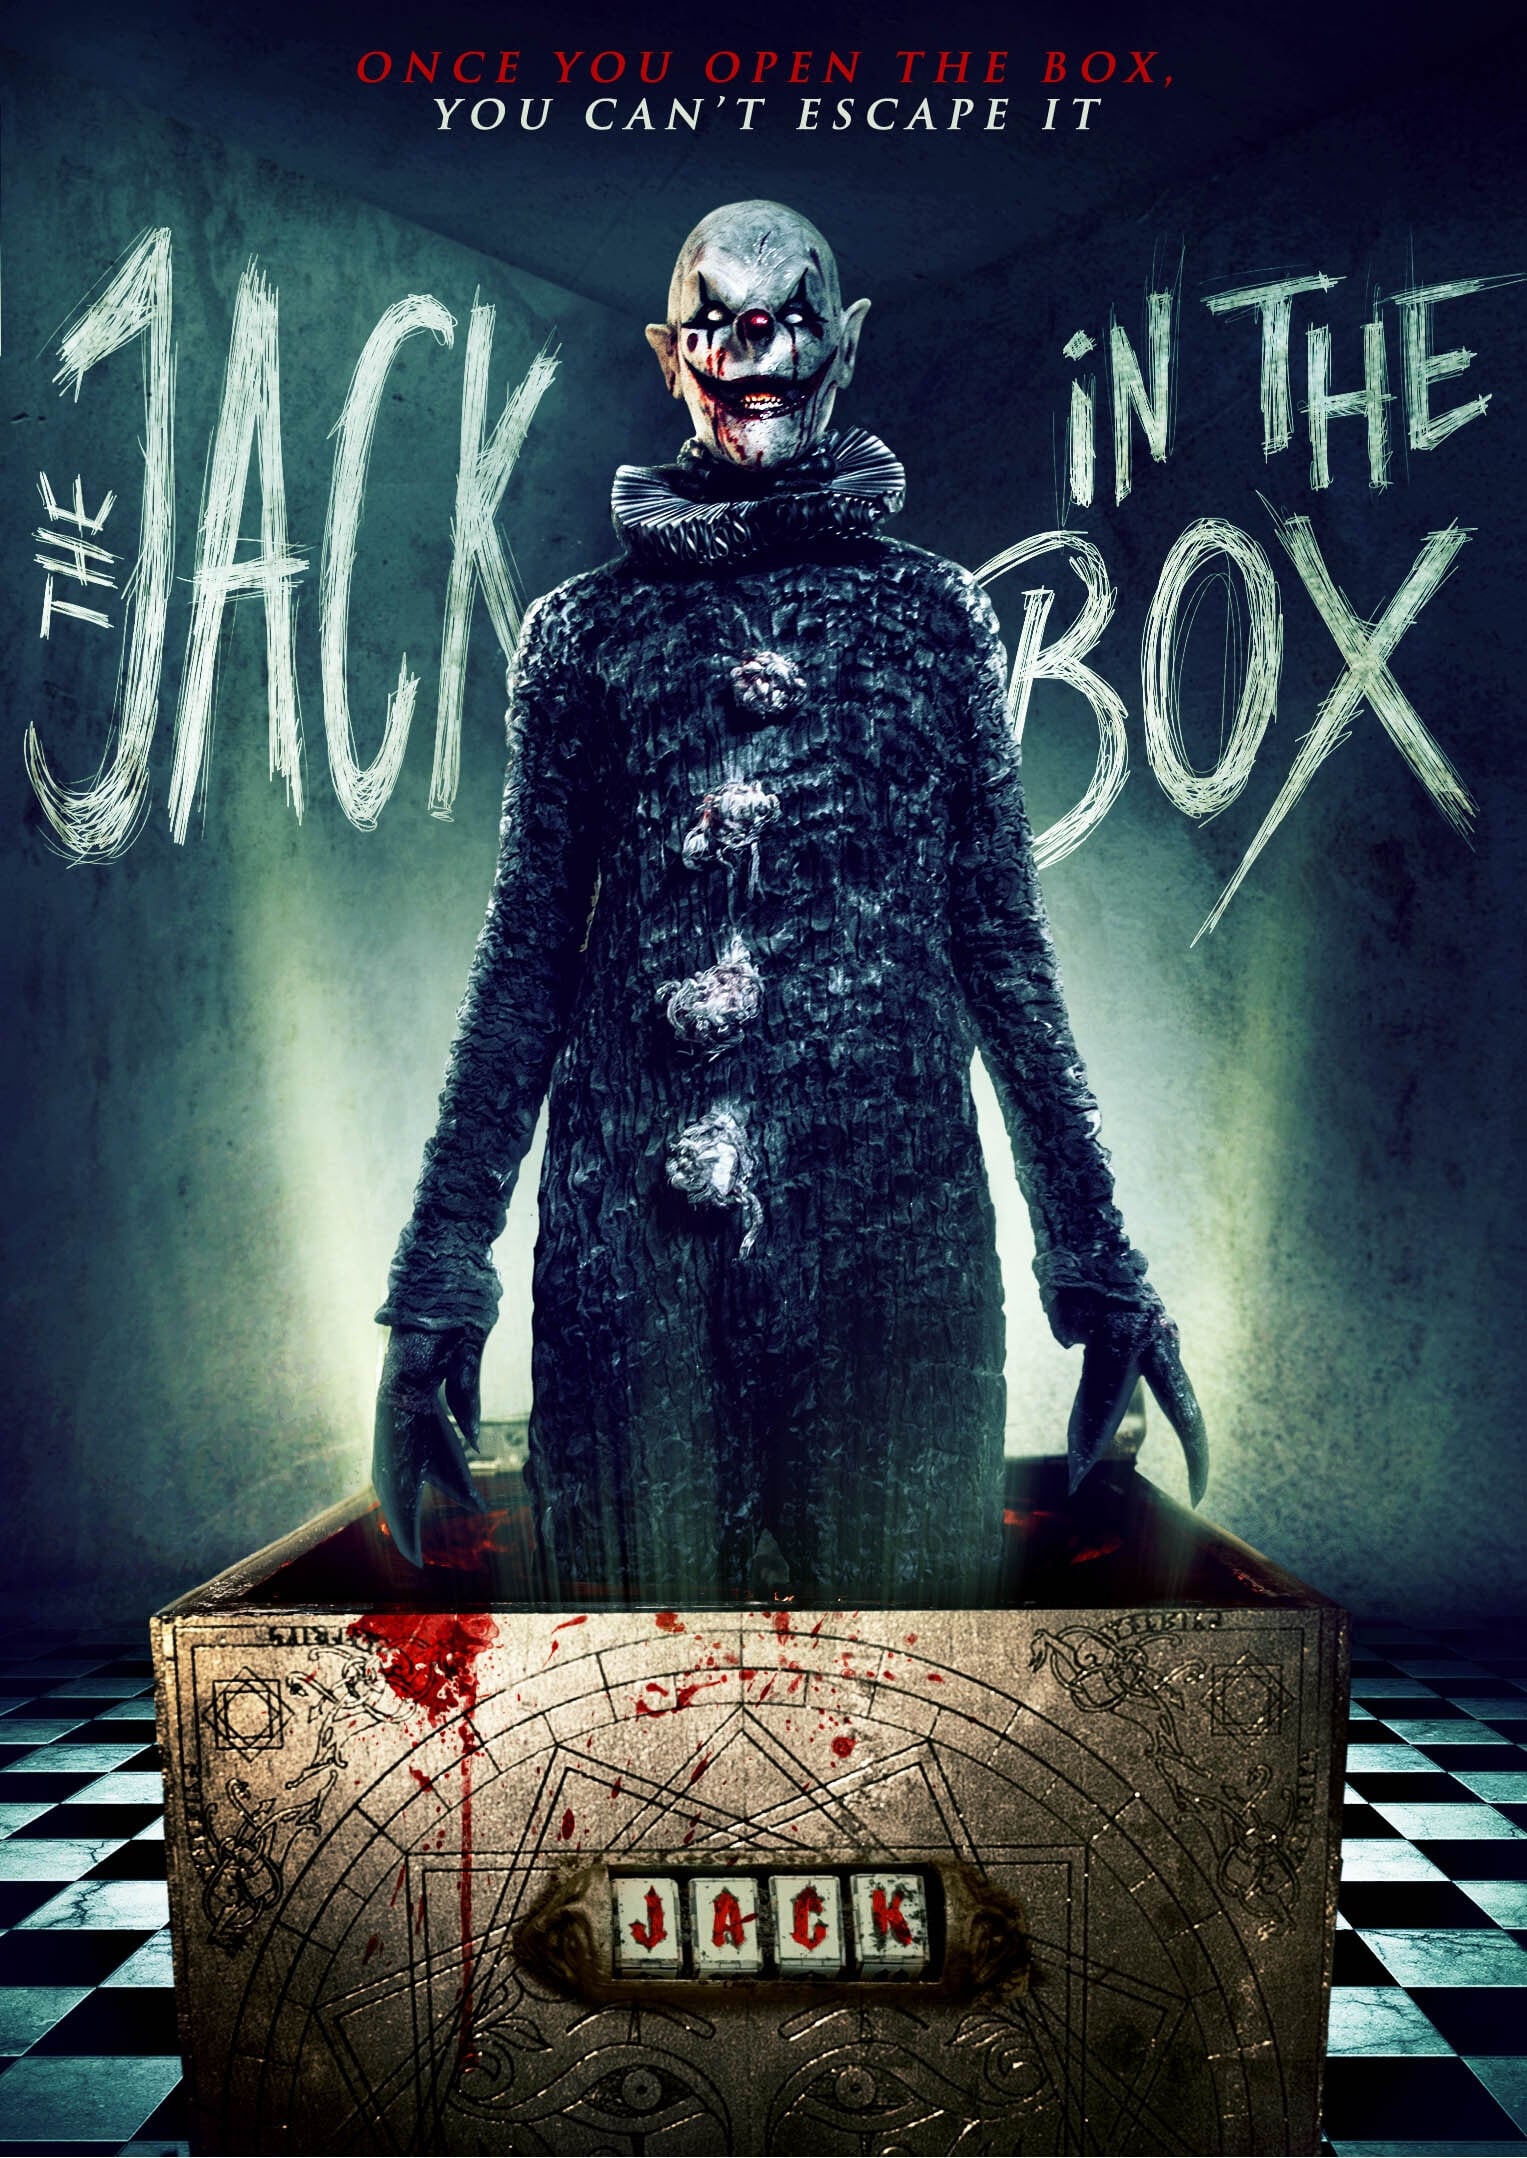 Jack en la caja maldita (2019) PLACEBO Full HD 1080p Latino